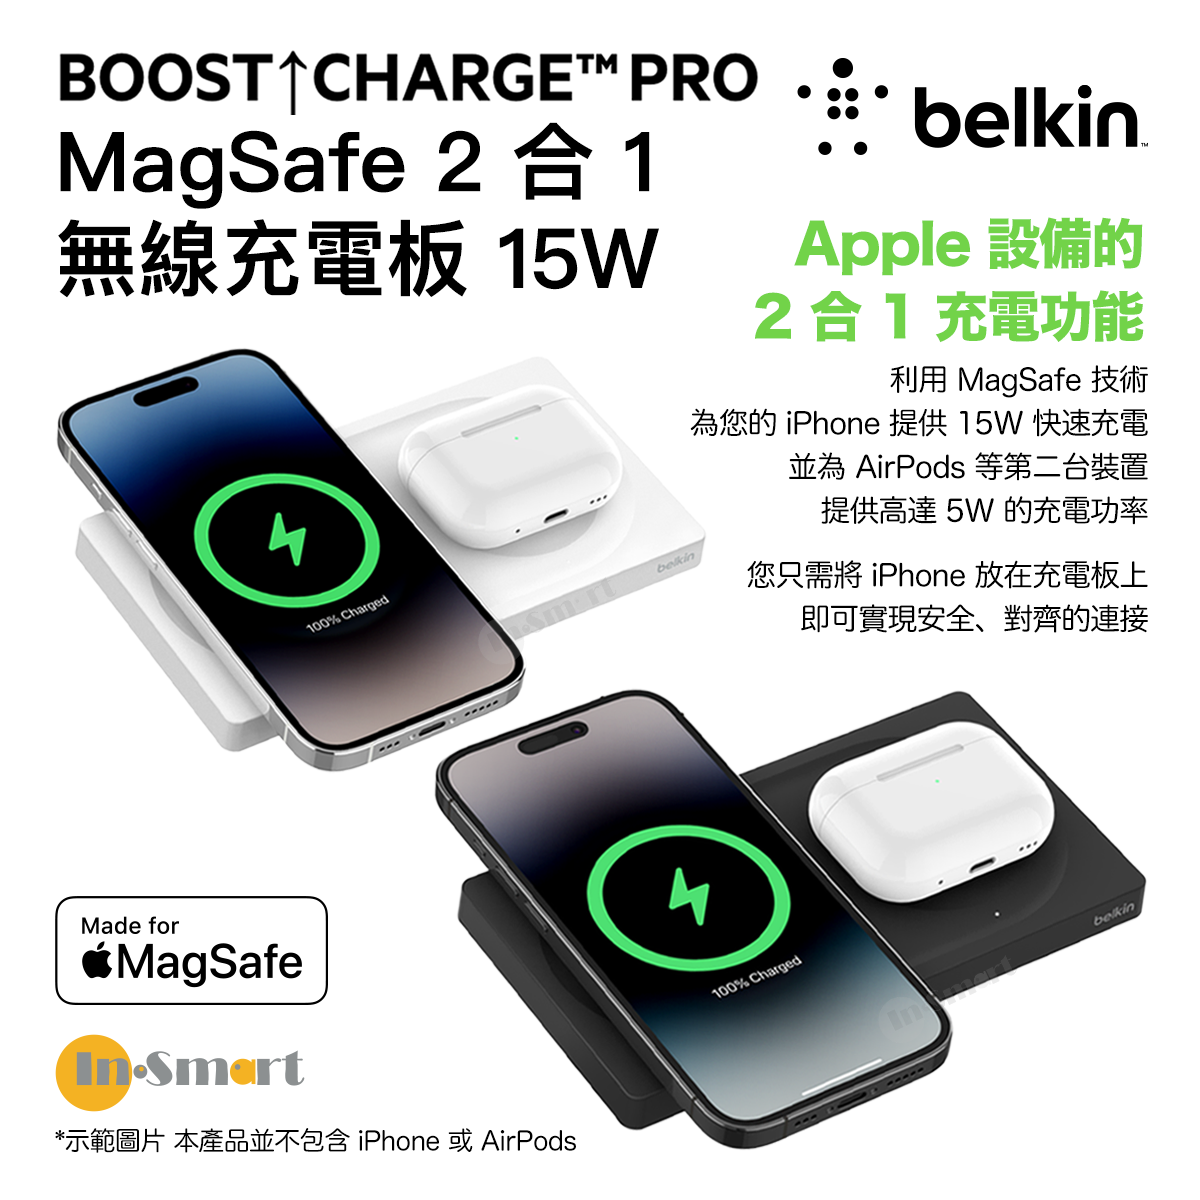 Belkin BoostCharge Pro MagSafe 2 合1 無線充電板15W｜In-Smart